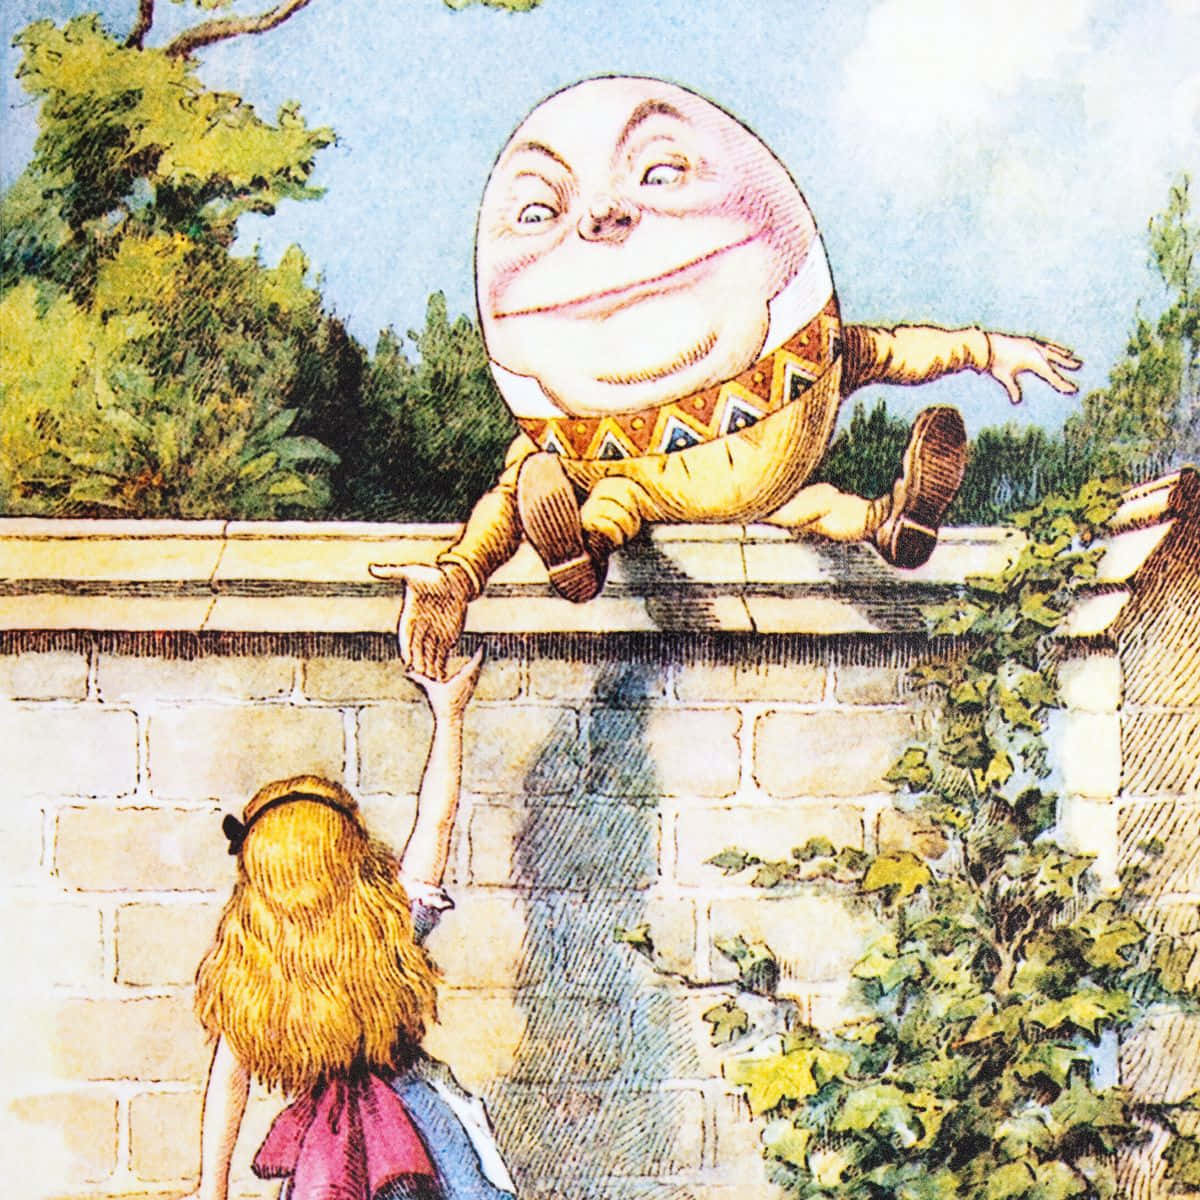 Humpty Dumpty Sitting on a Wall